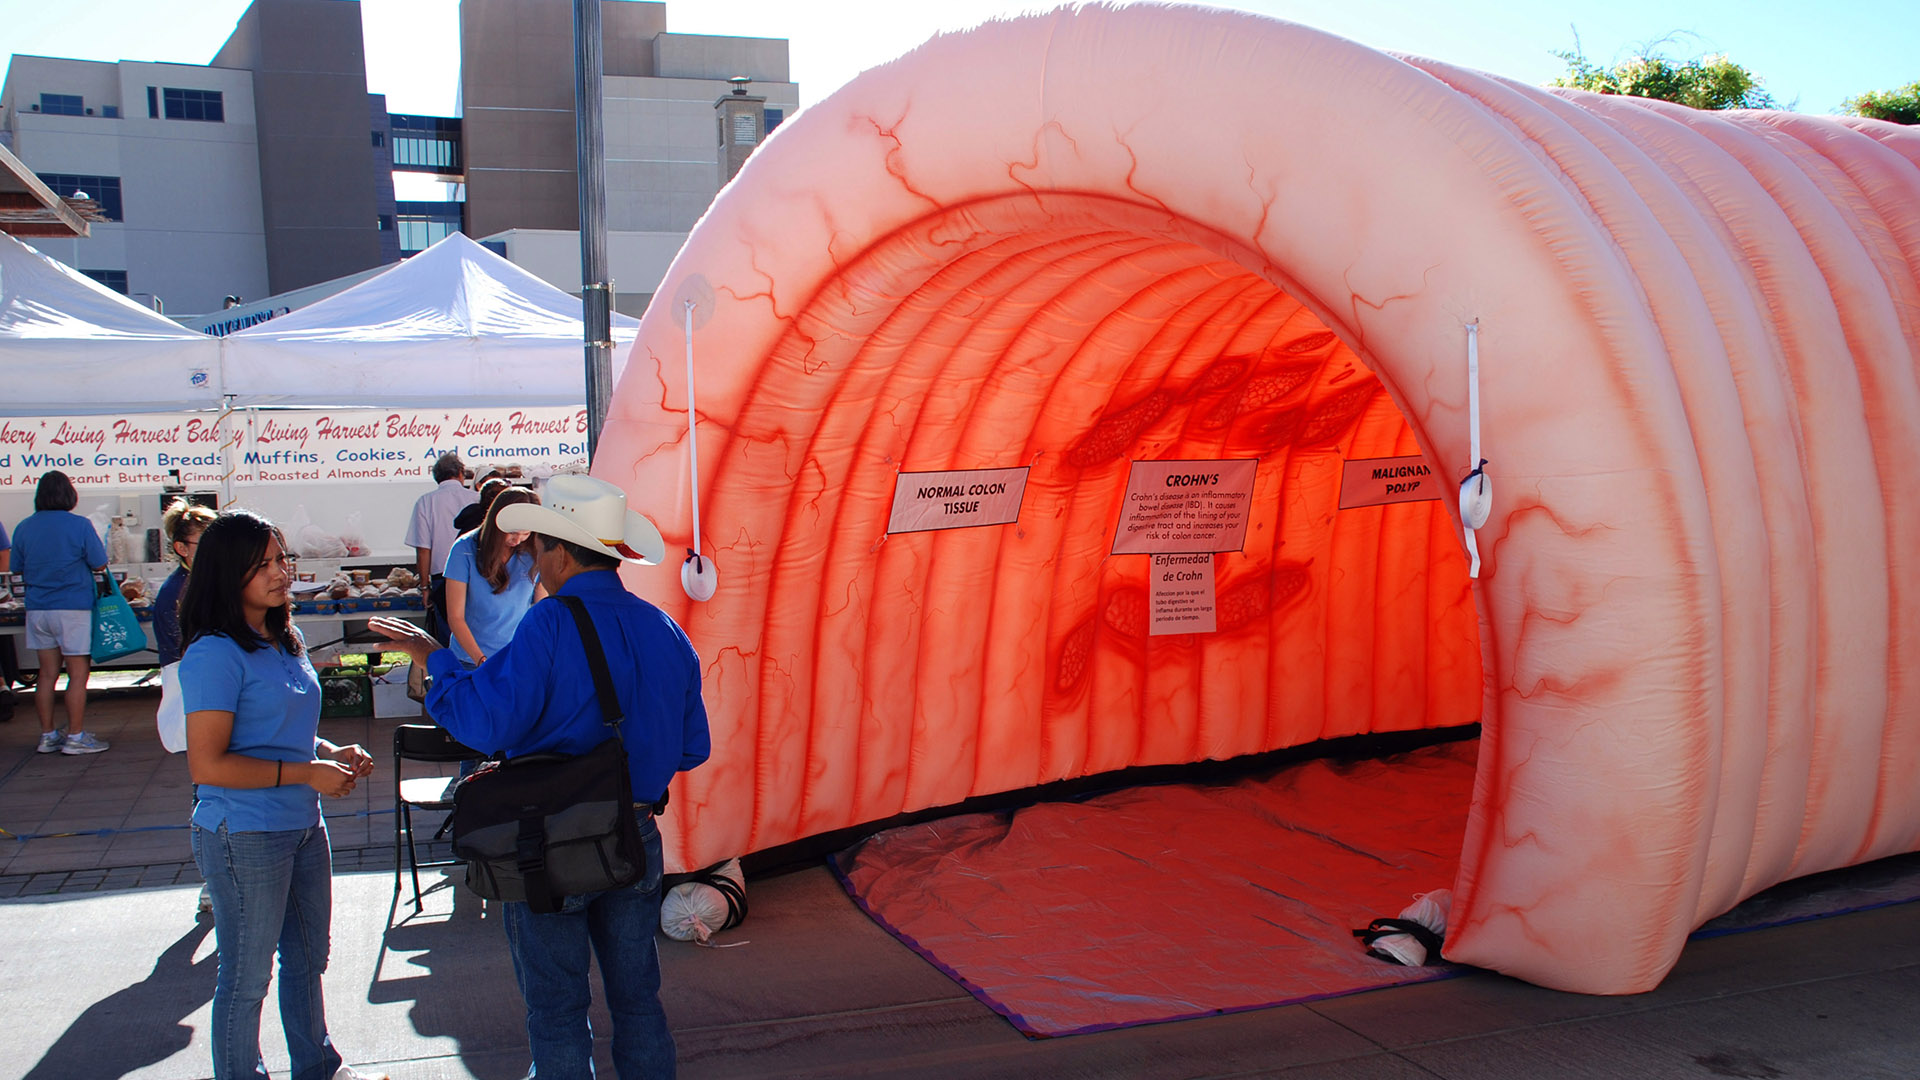 The inflatable colon at a community health fair. 